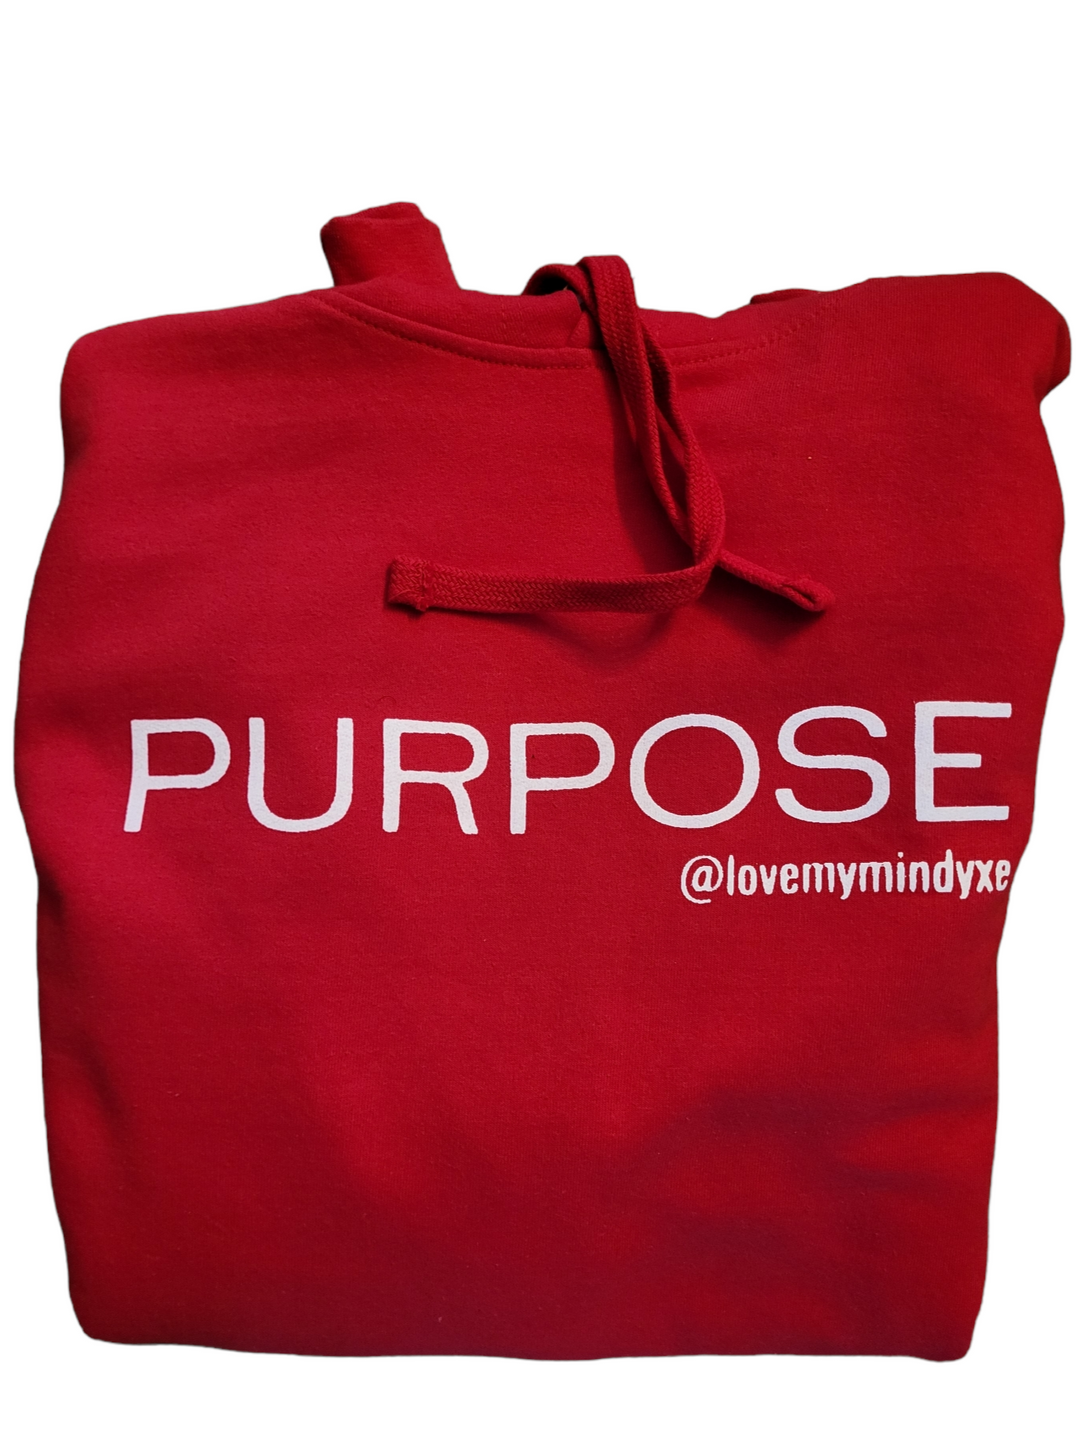 Adult Hooded Sweatshirt - PURPOSE @lovemymind - Red